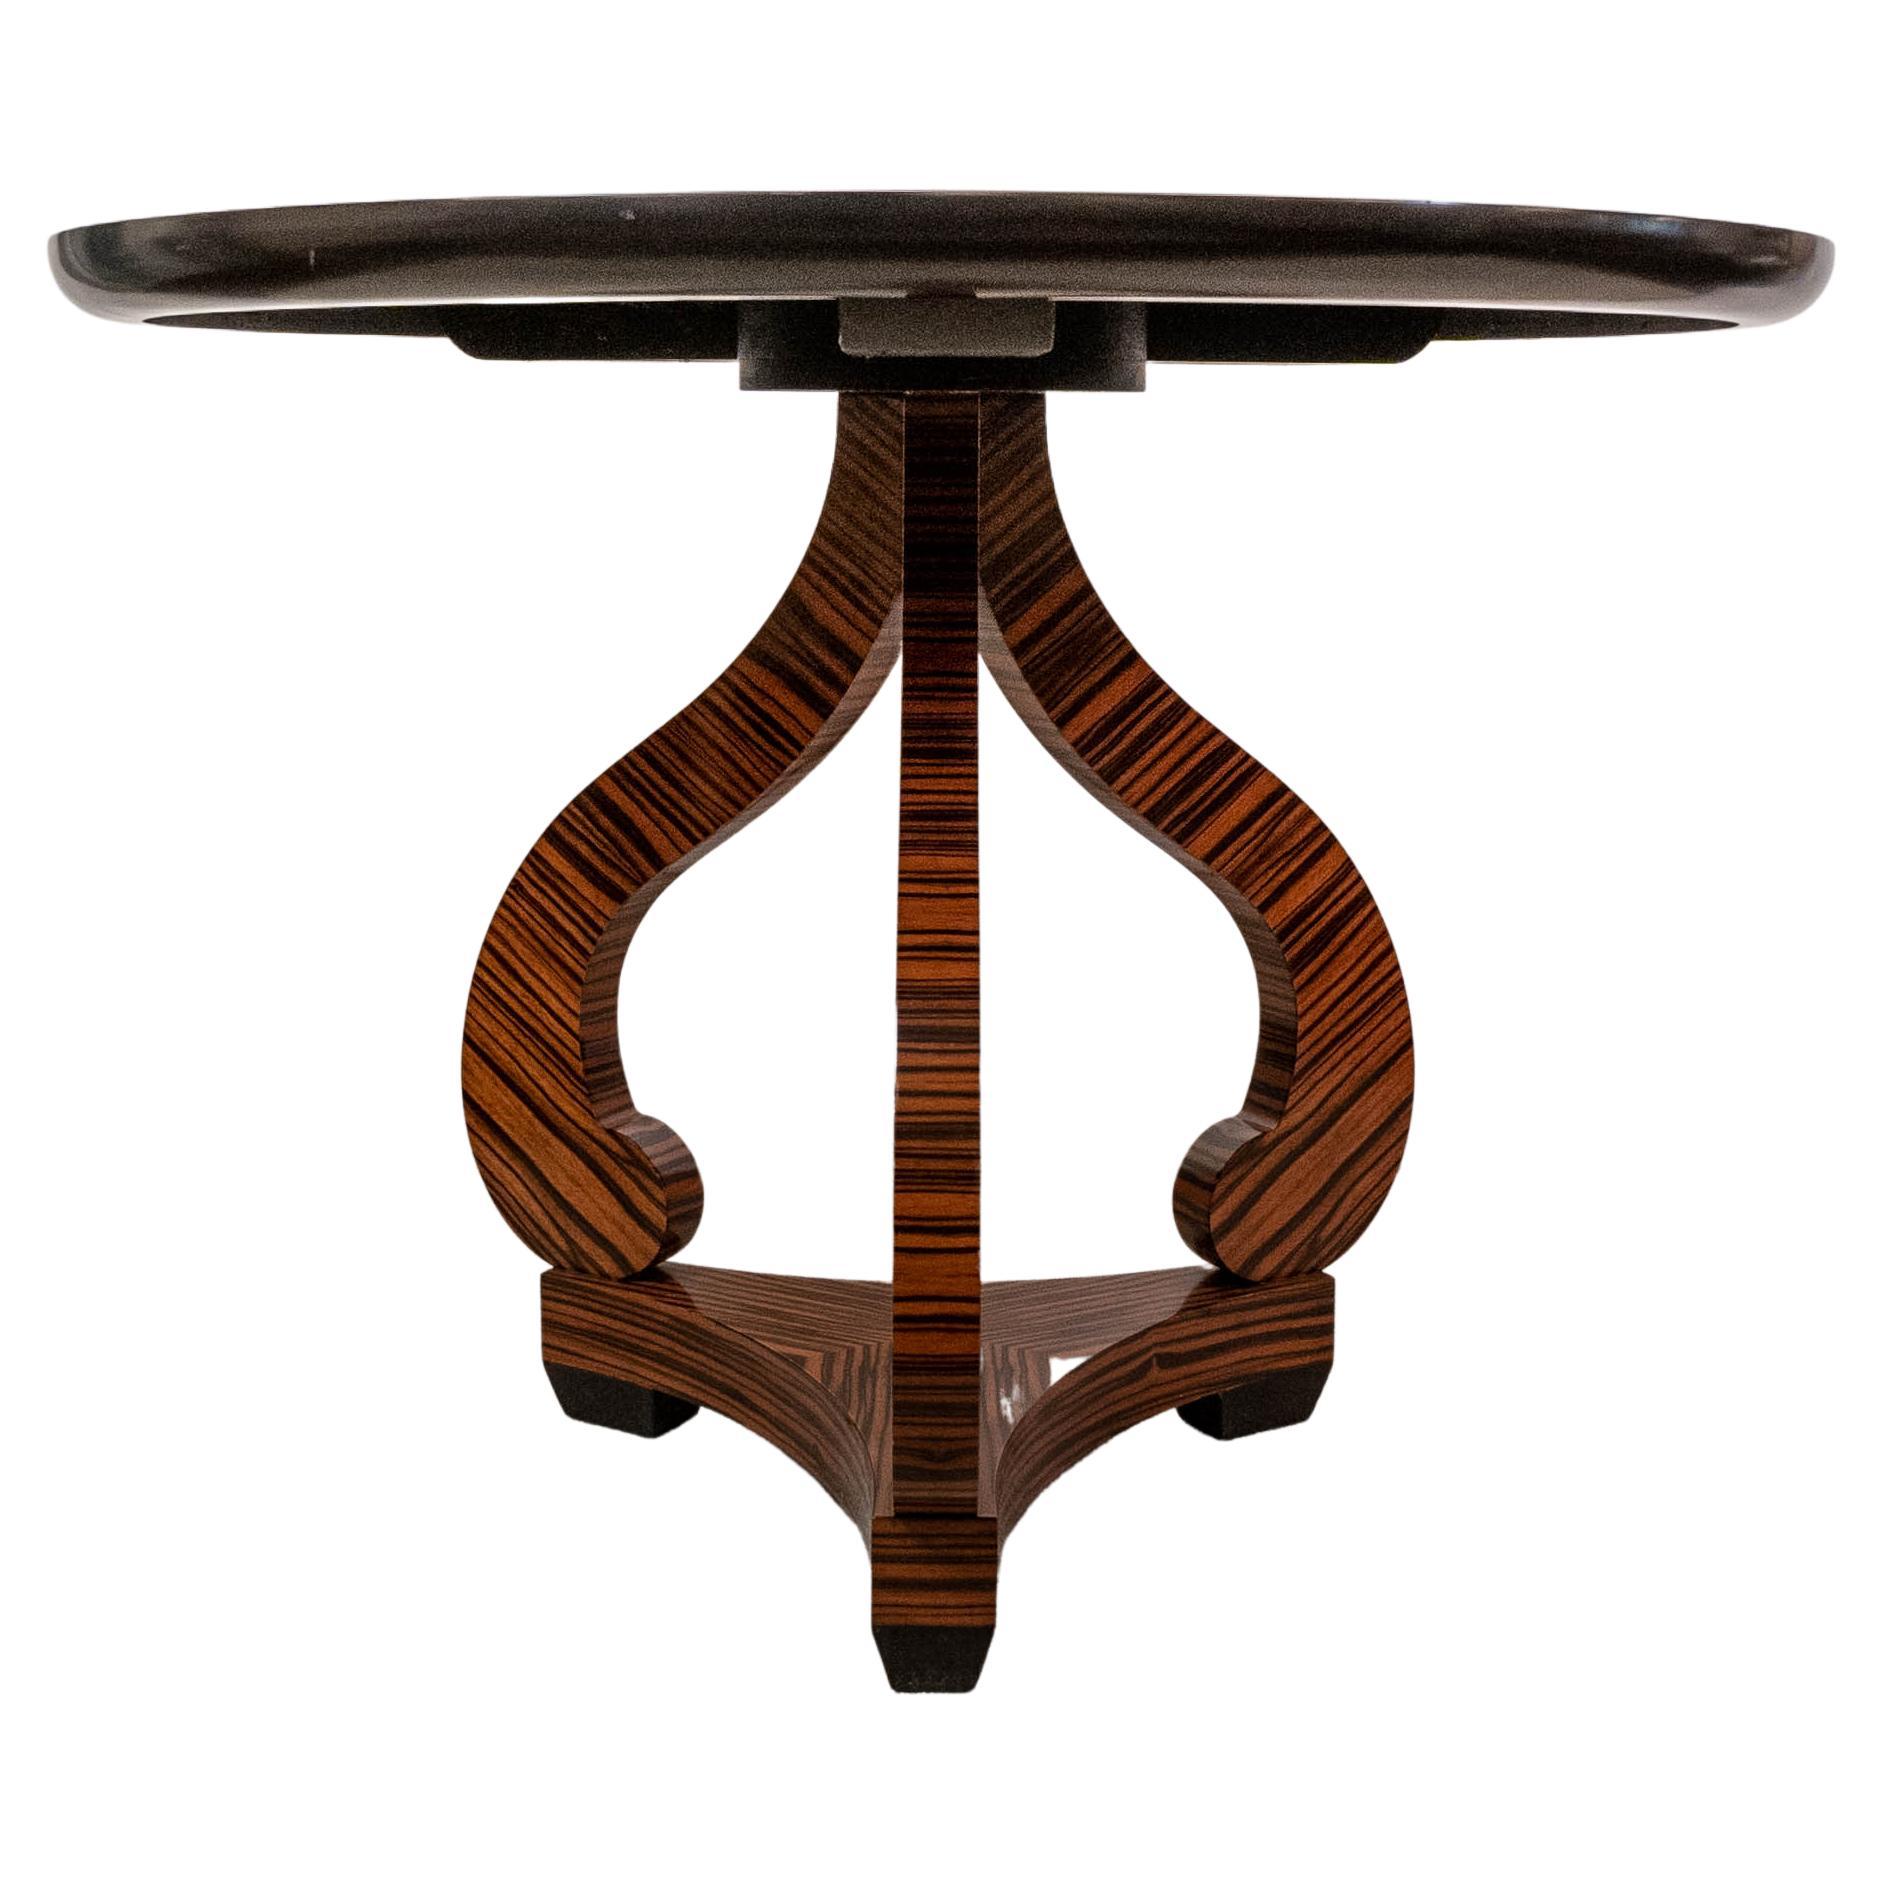 Stunning custom made sleek sophisticated center table by Serban Furniture Kirk Brummell called 